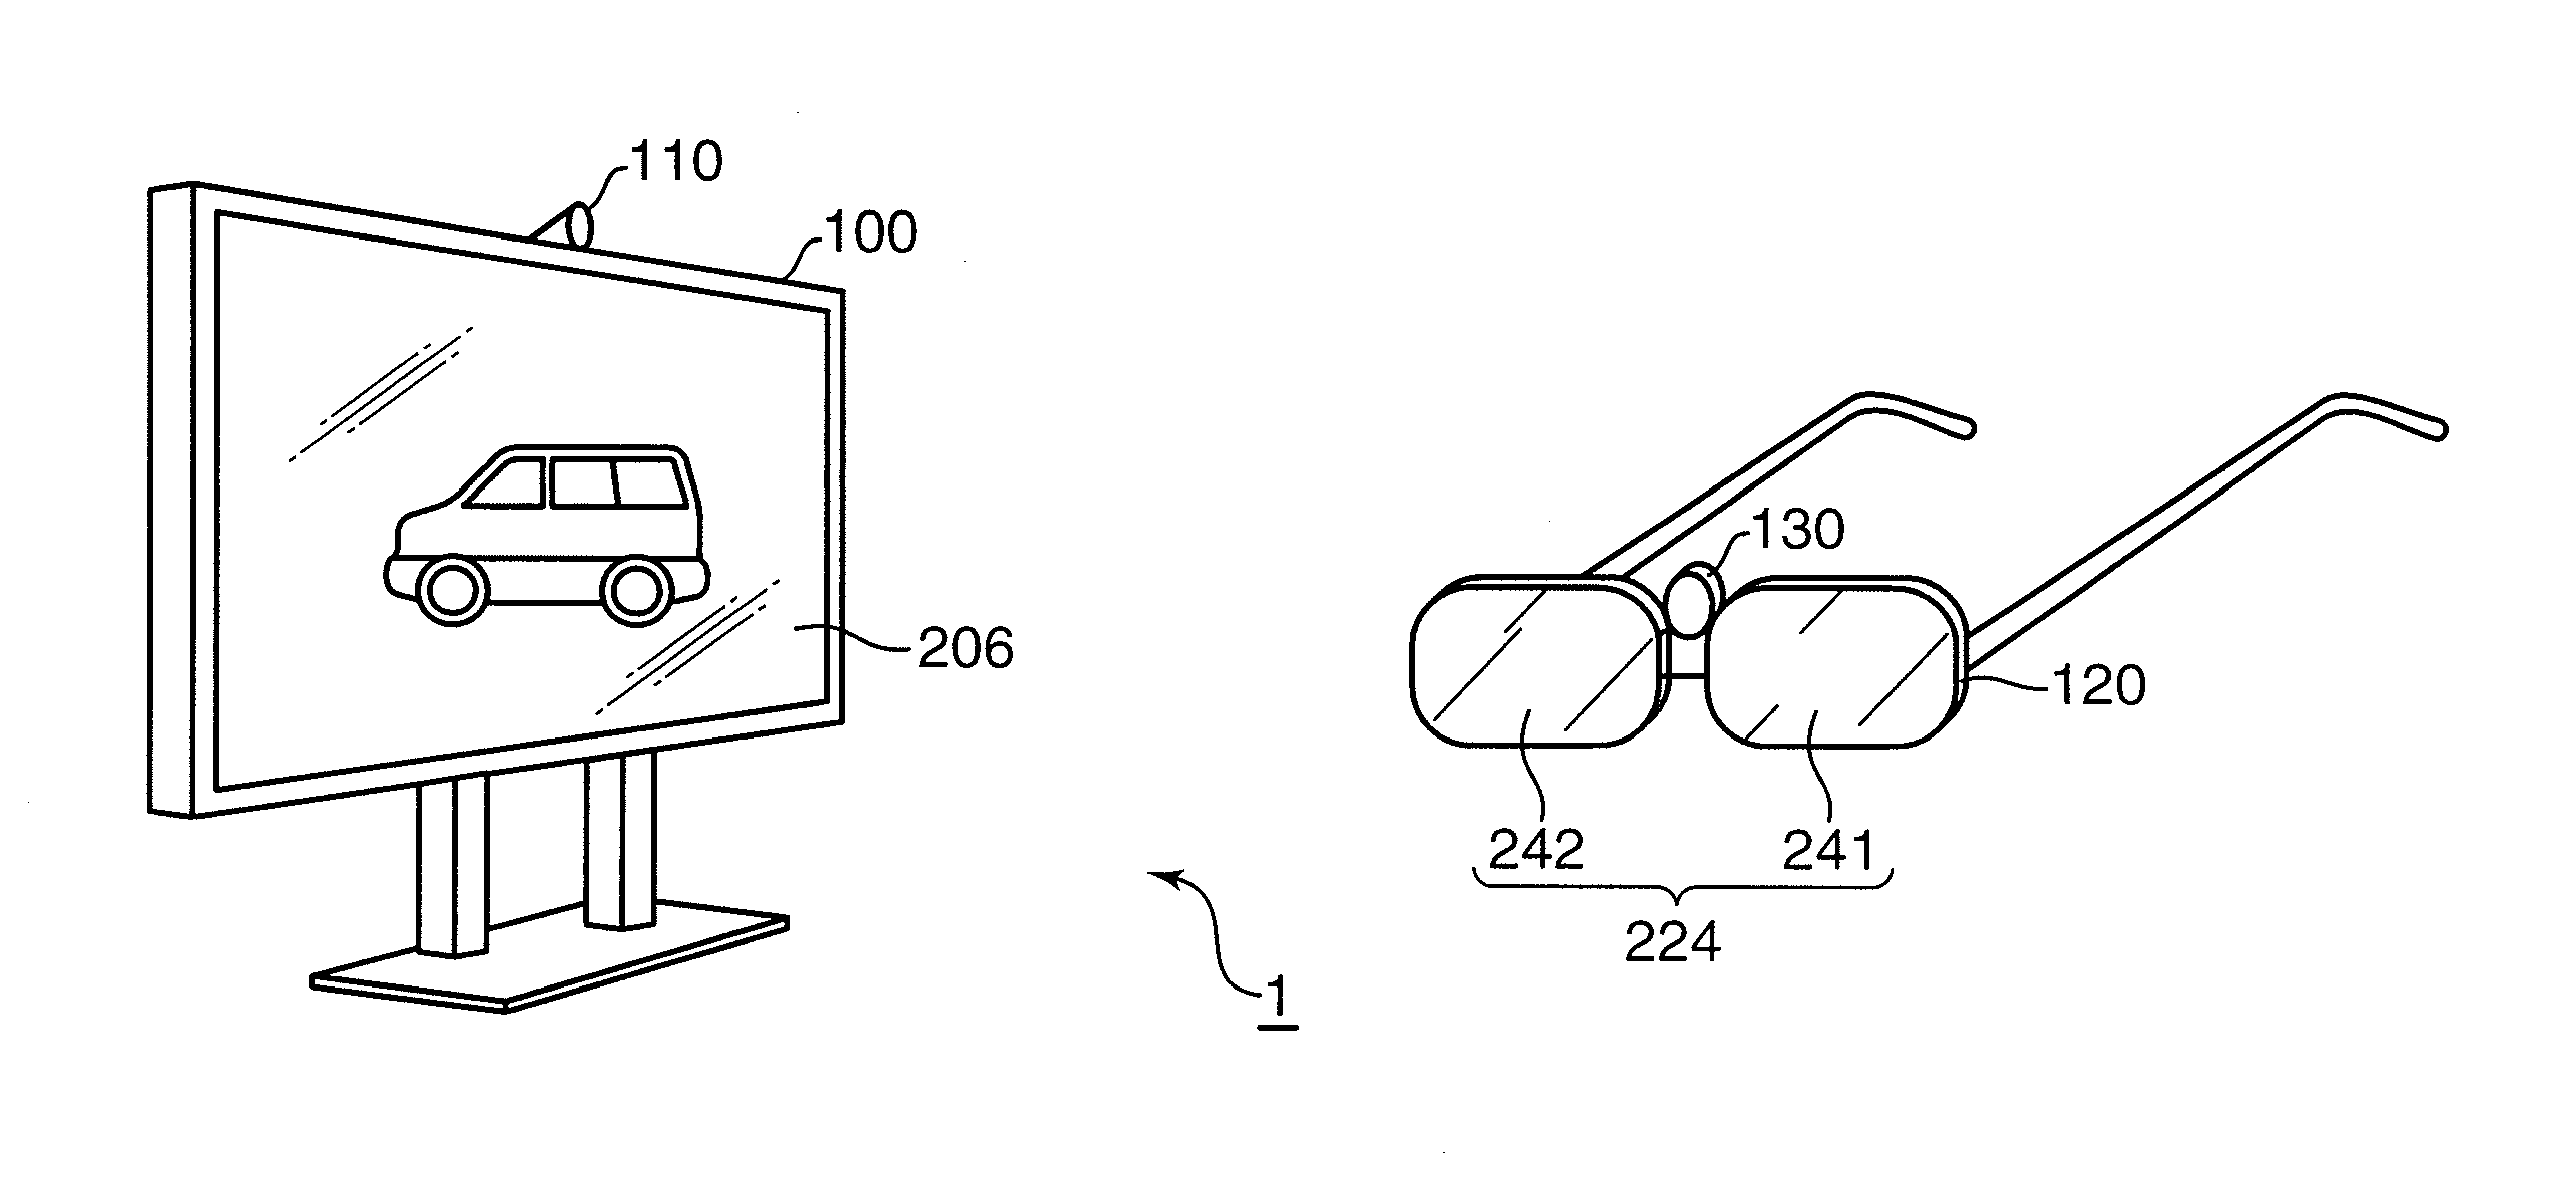 Video display apparatus, video viewing glasses, and system comprising the display apparatus and the glasses